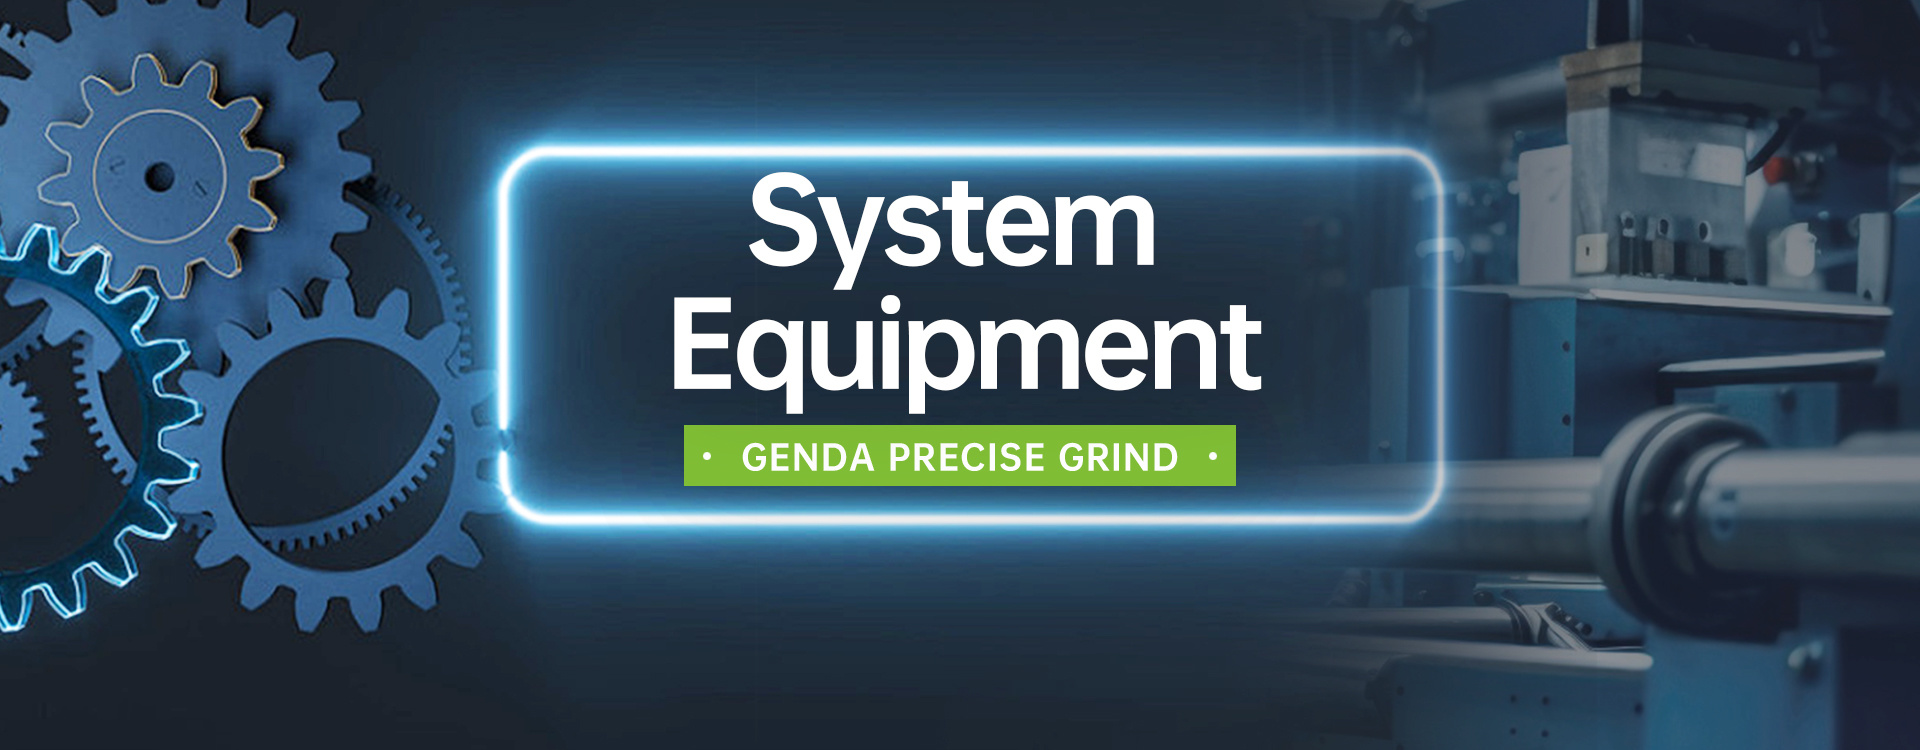 System Equipment